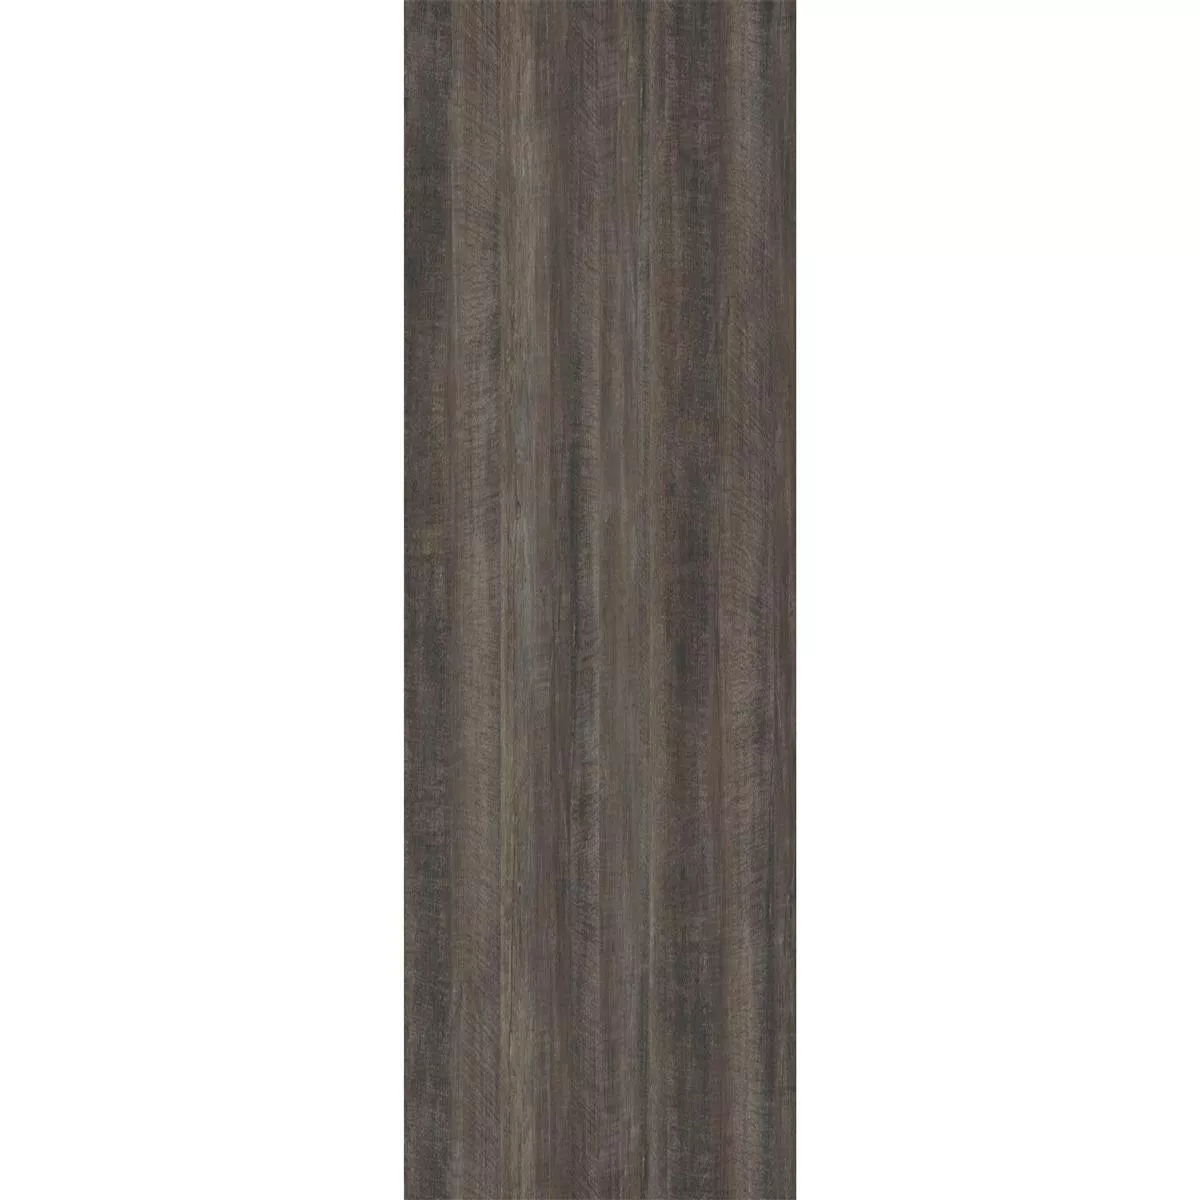 Suelo De Vinilo Sistema De Clic Tripton Marrón Oscuro 17,2x121cm